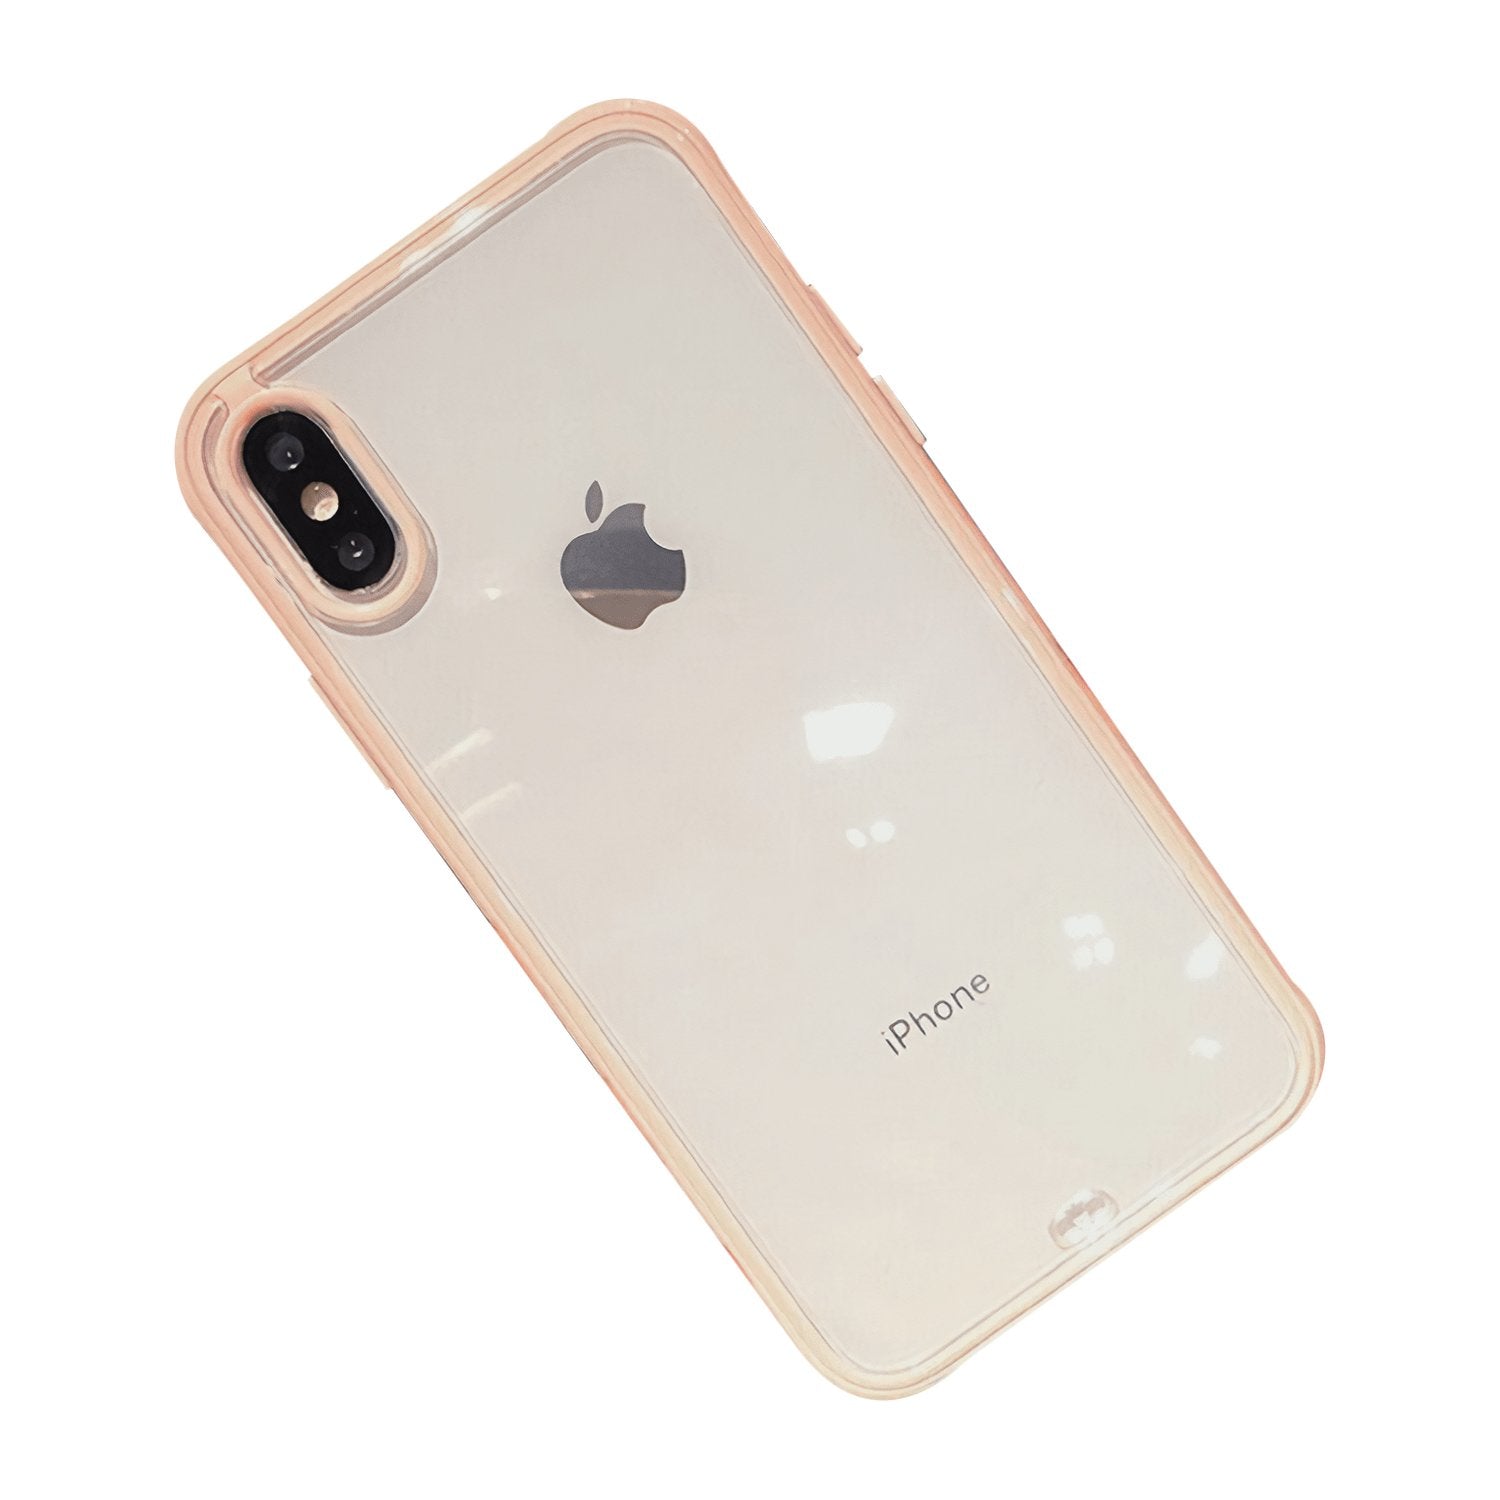 iPhone XR Cases for sale in Roper, Kansas